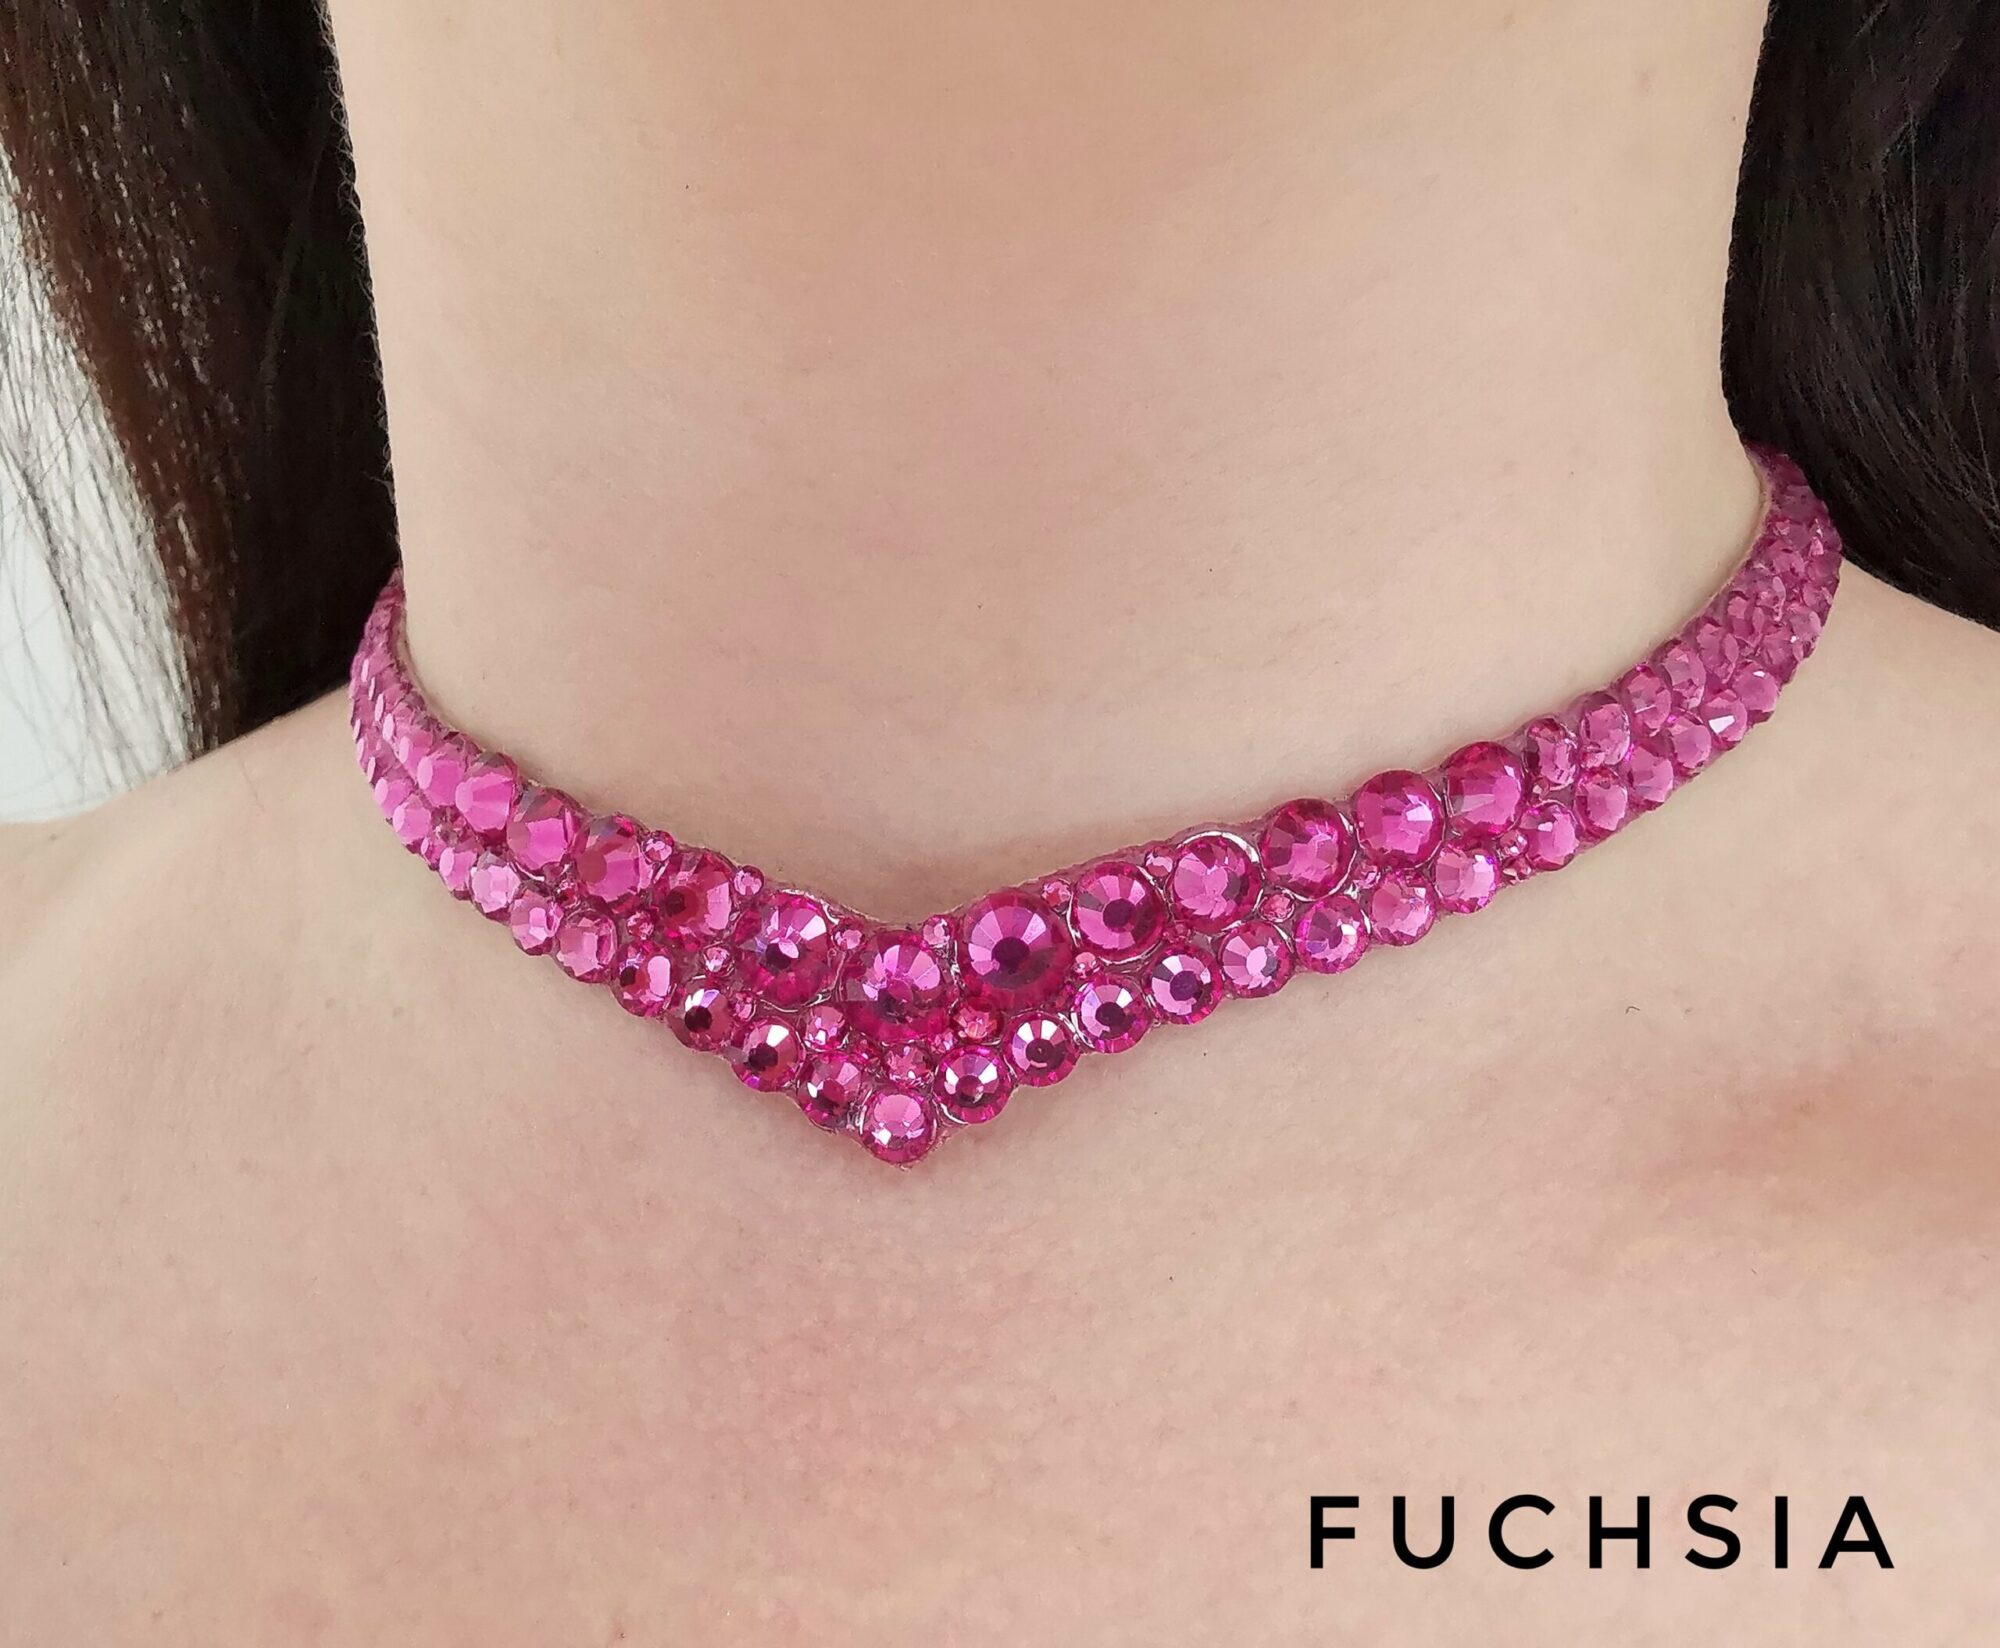 Ballroom fuchsia necklace with crystals